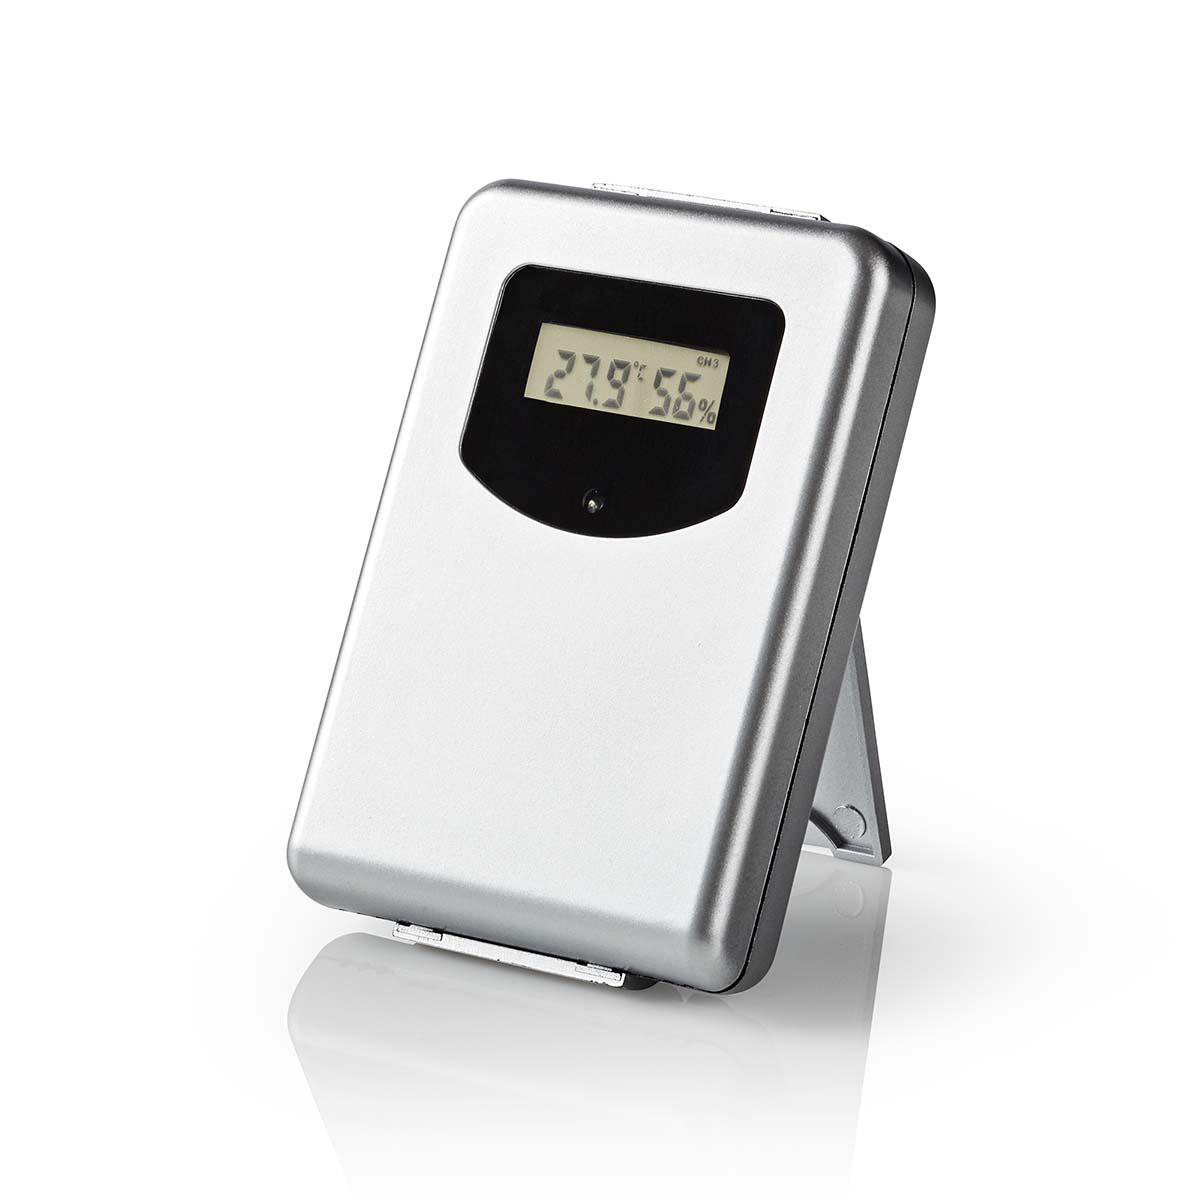 DANIU 433MHz Wireless Weather Station Digital Thermometer Humidity Sensor 